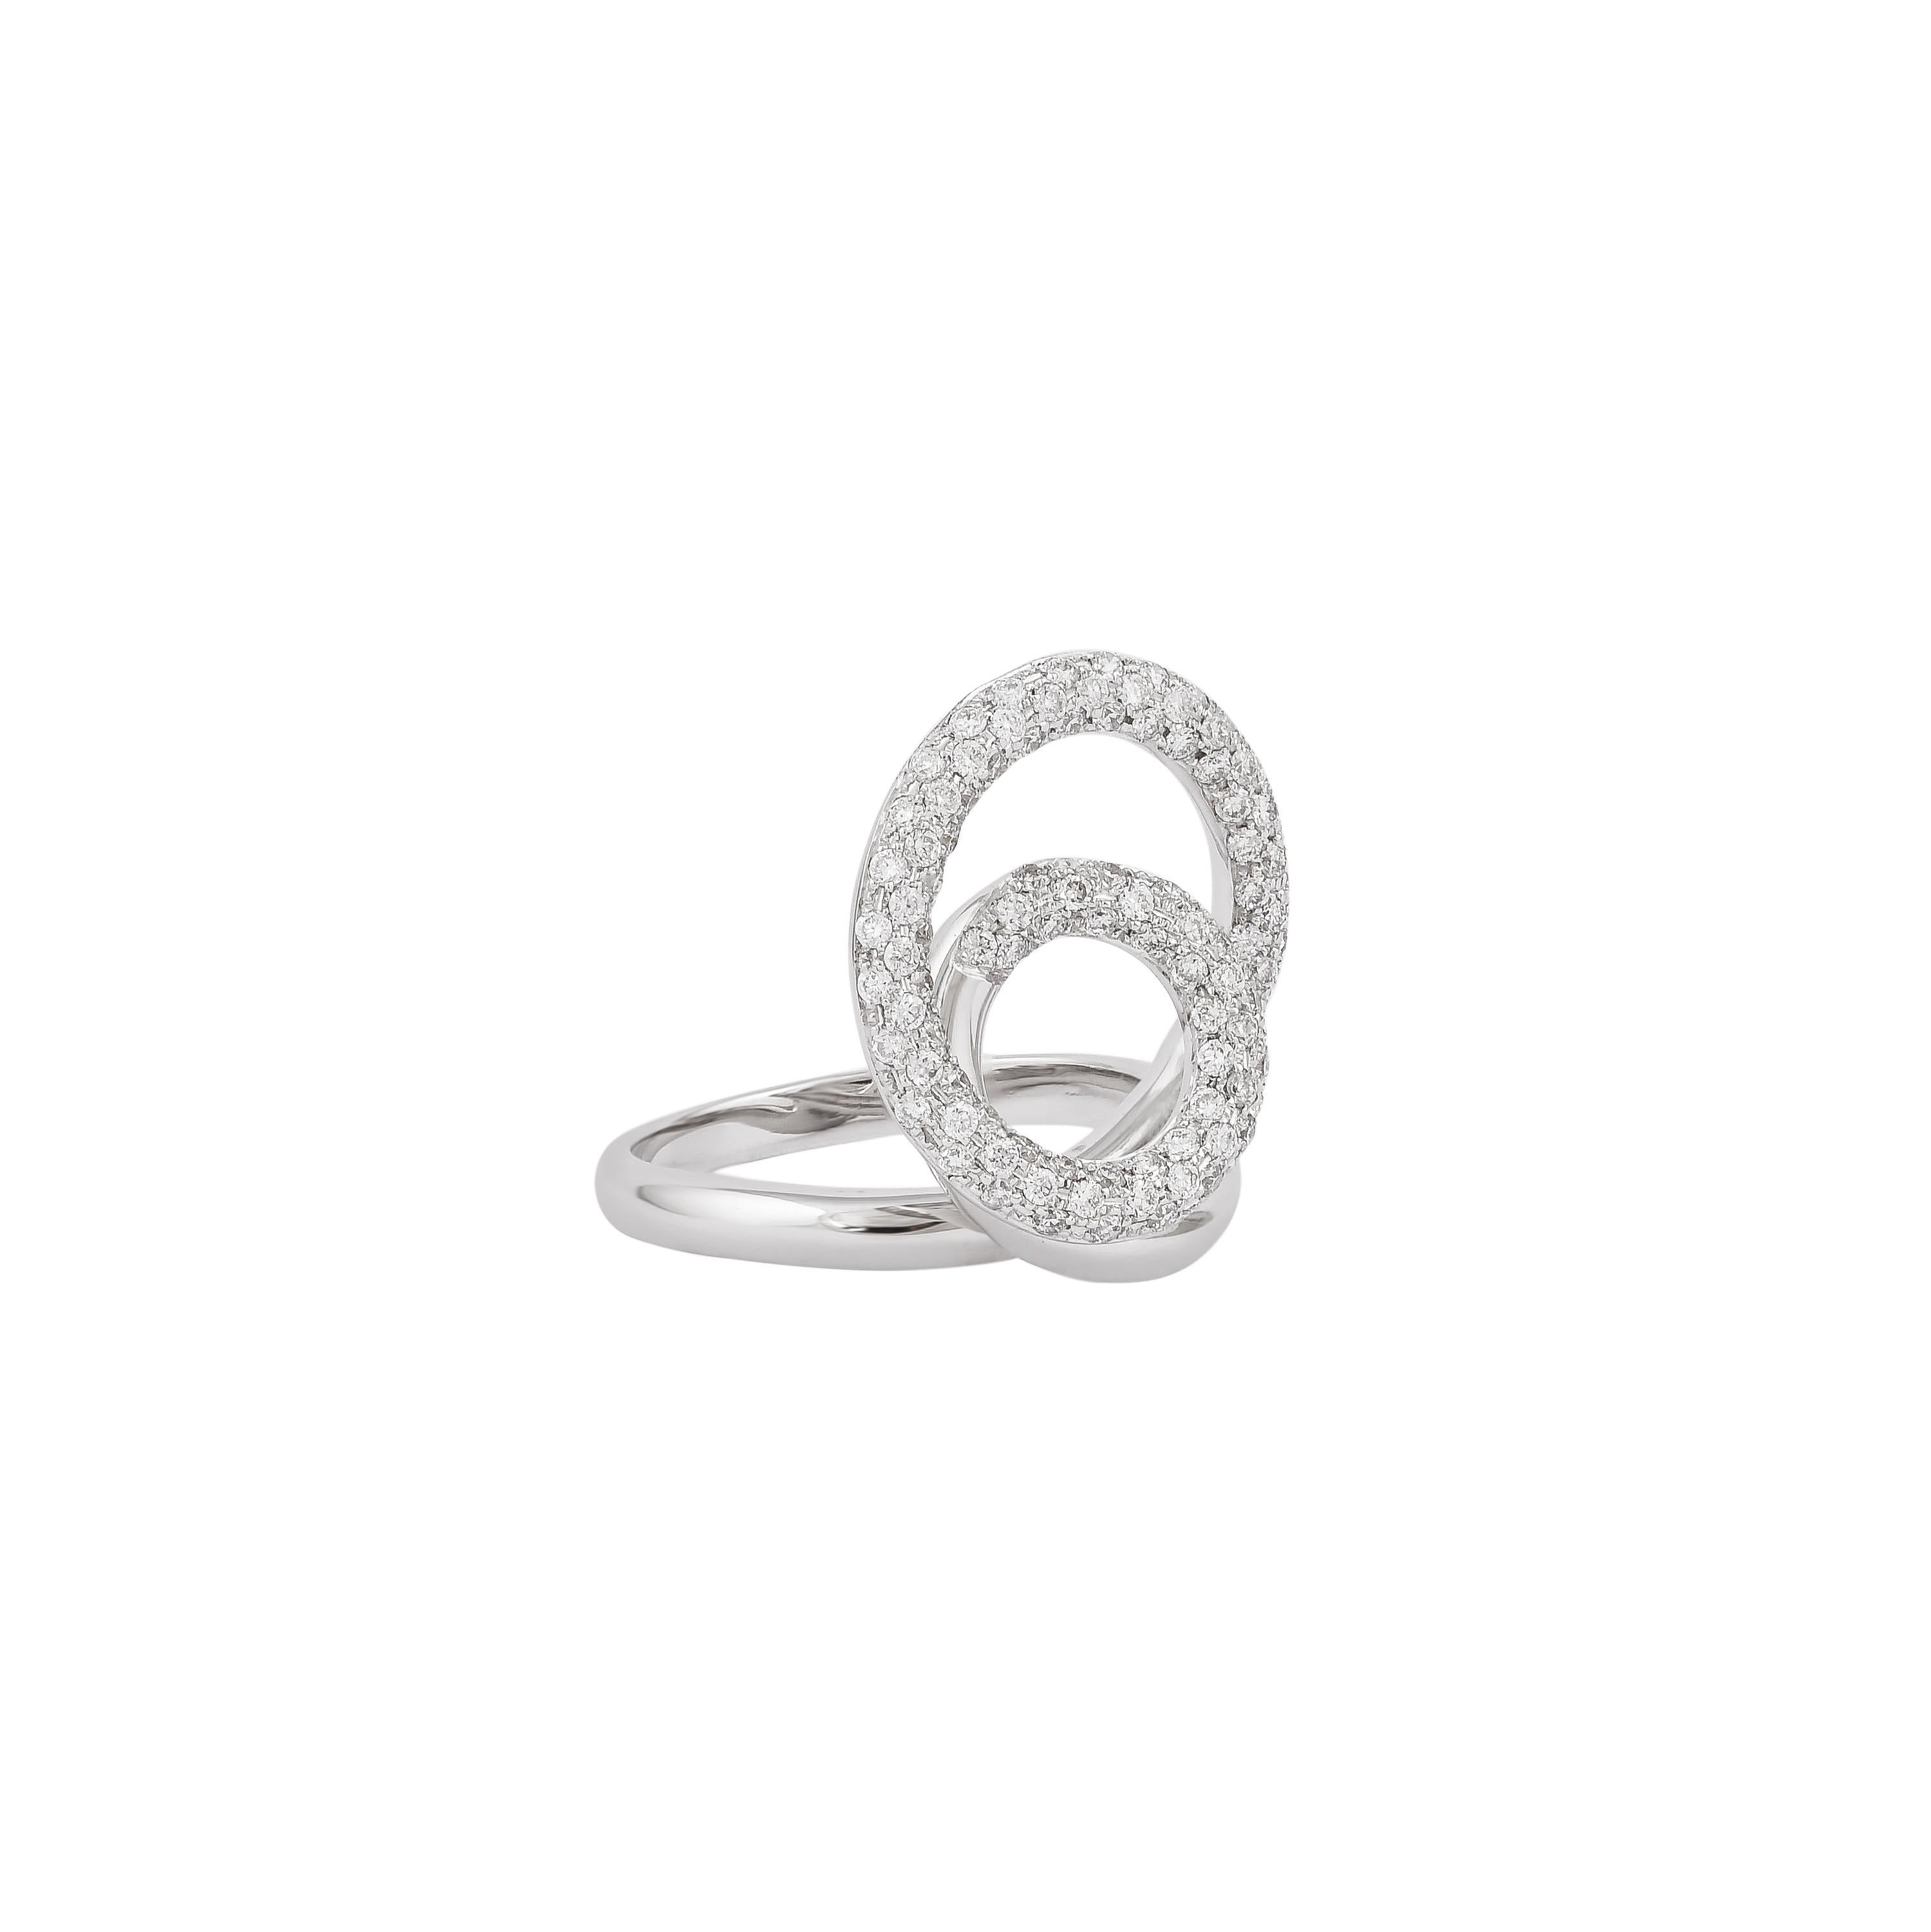 Round Cut 0.82 Carat Diamond Ring in 18 Karat White Gold For Sale